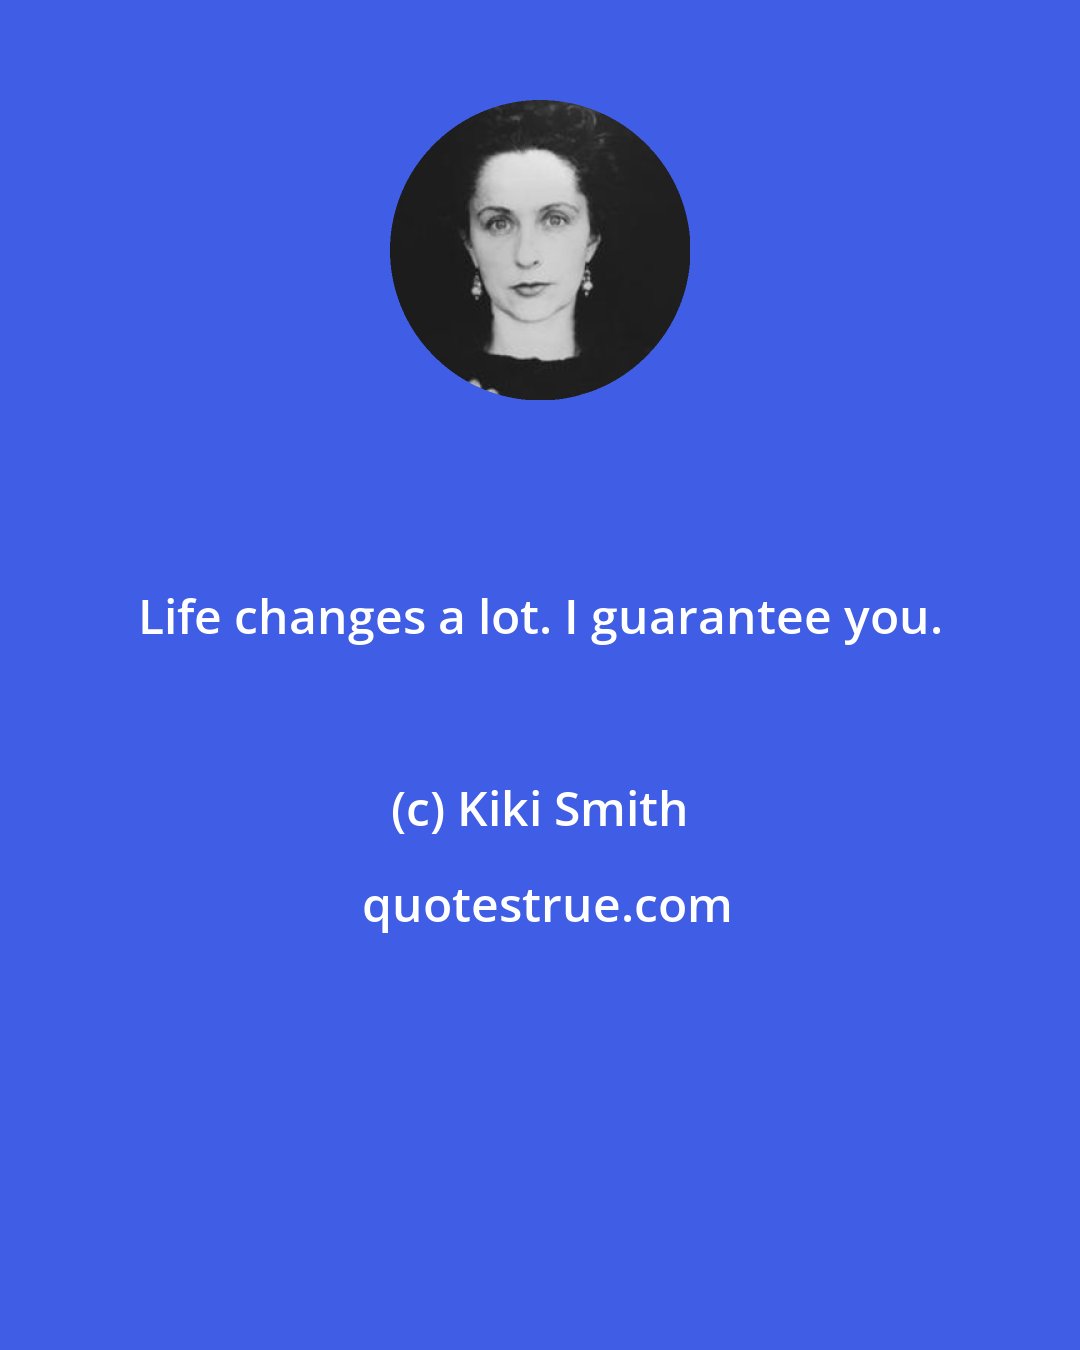 Kiki Smith: Life changes a lot. I guarantee you.